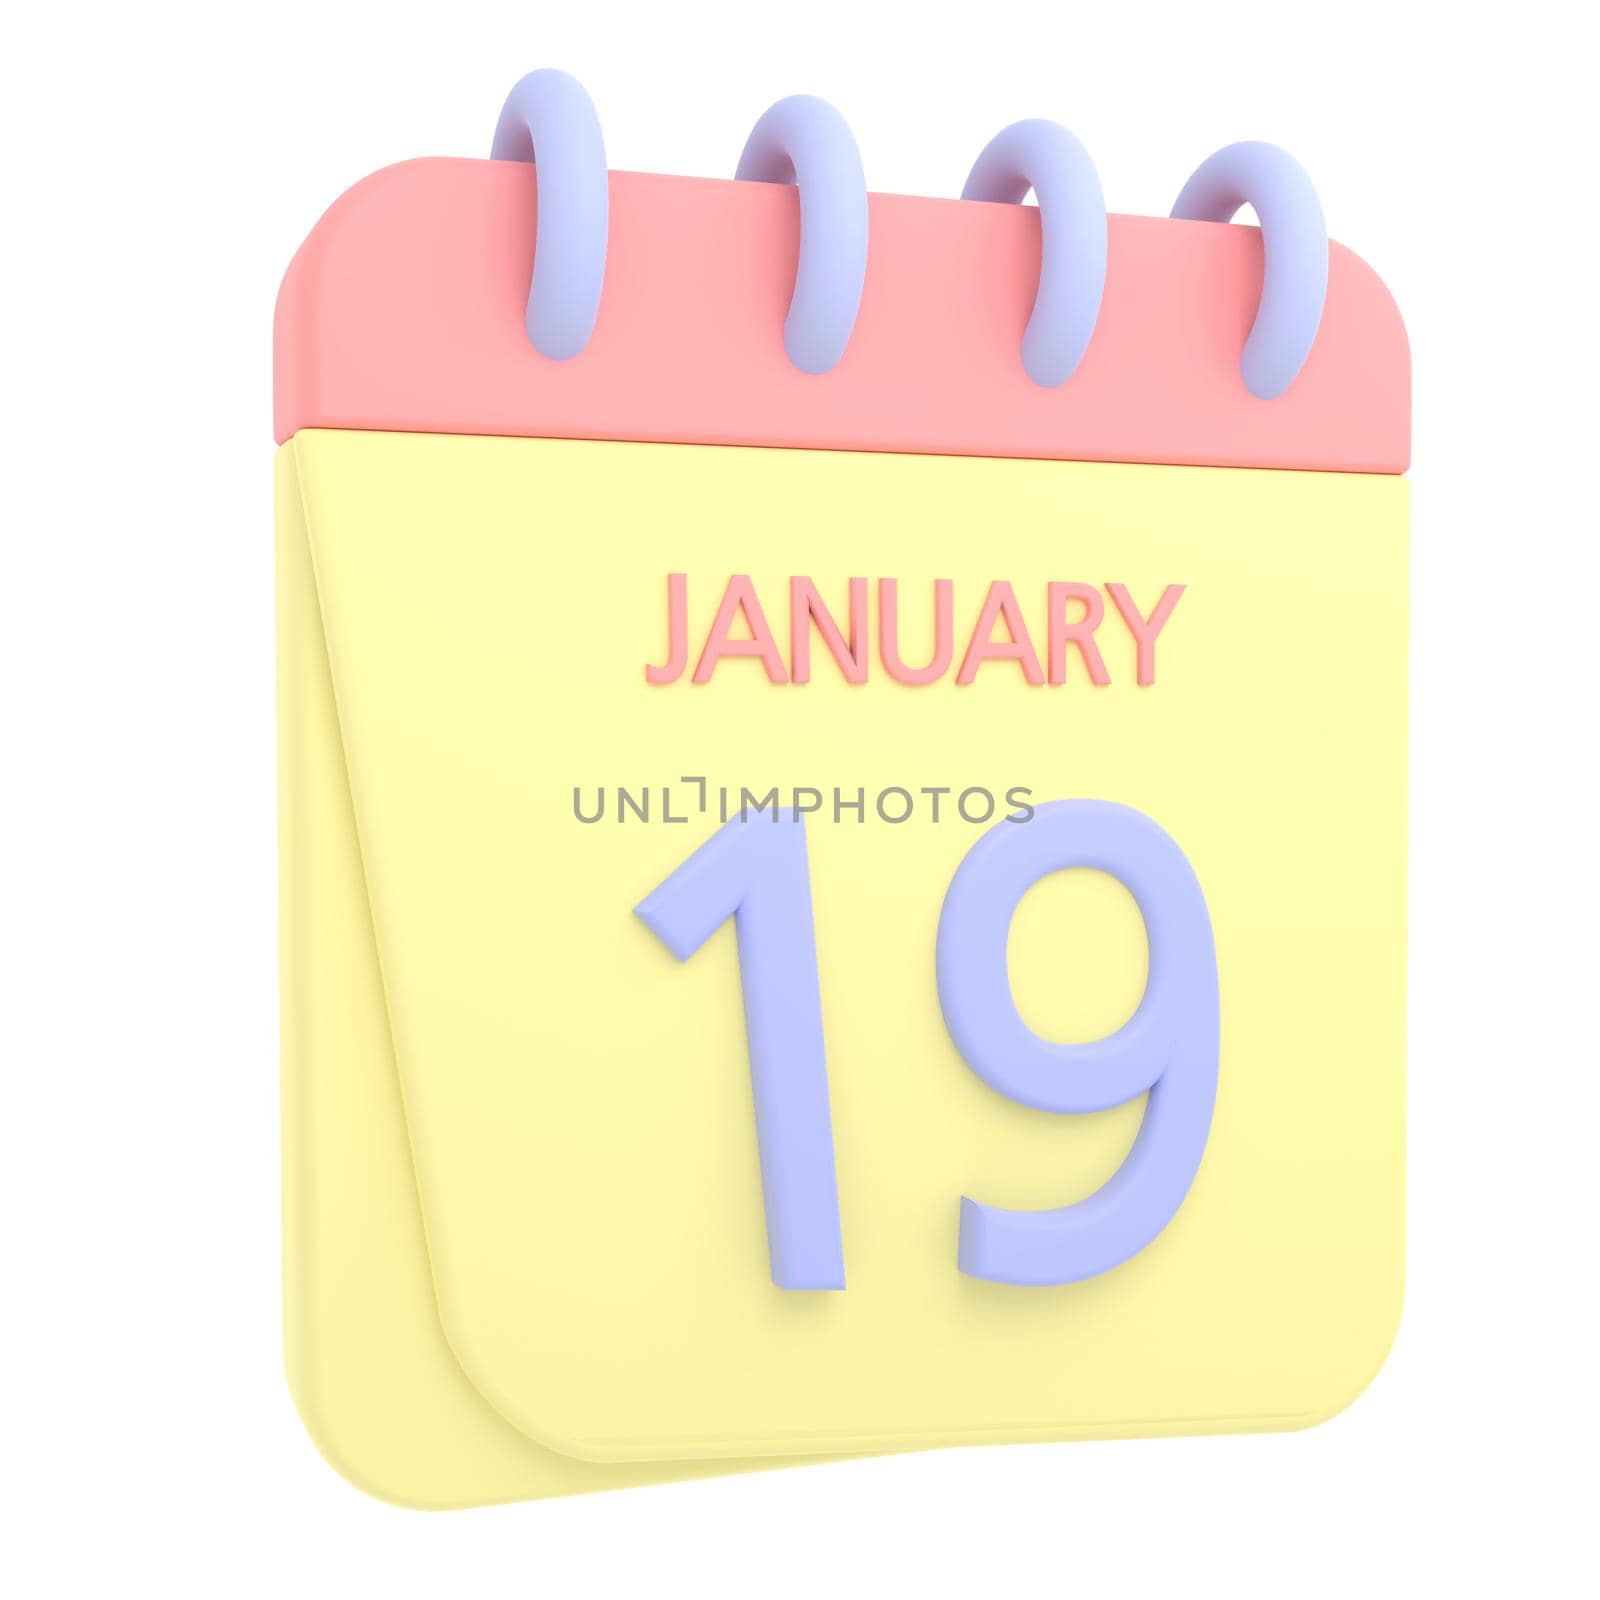 19th January 3D calendar icon by AnnaMarin